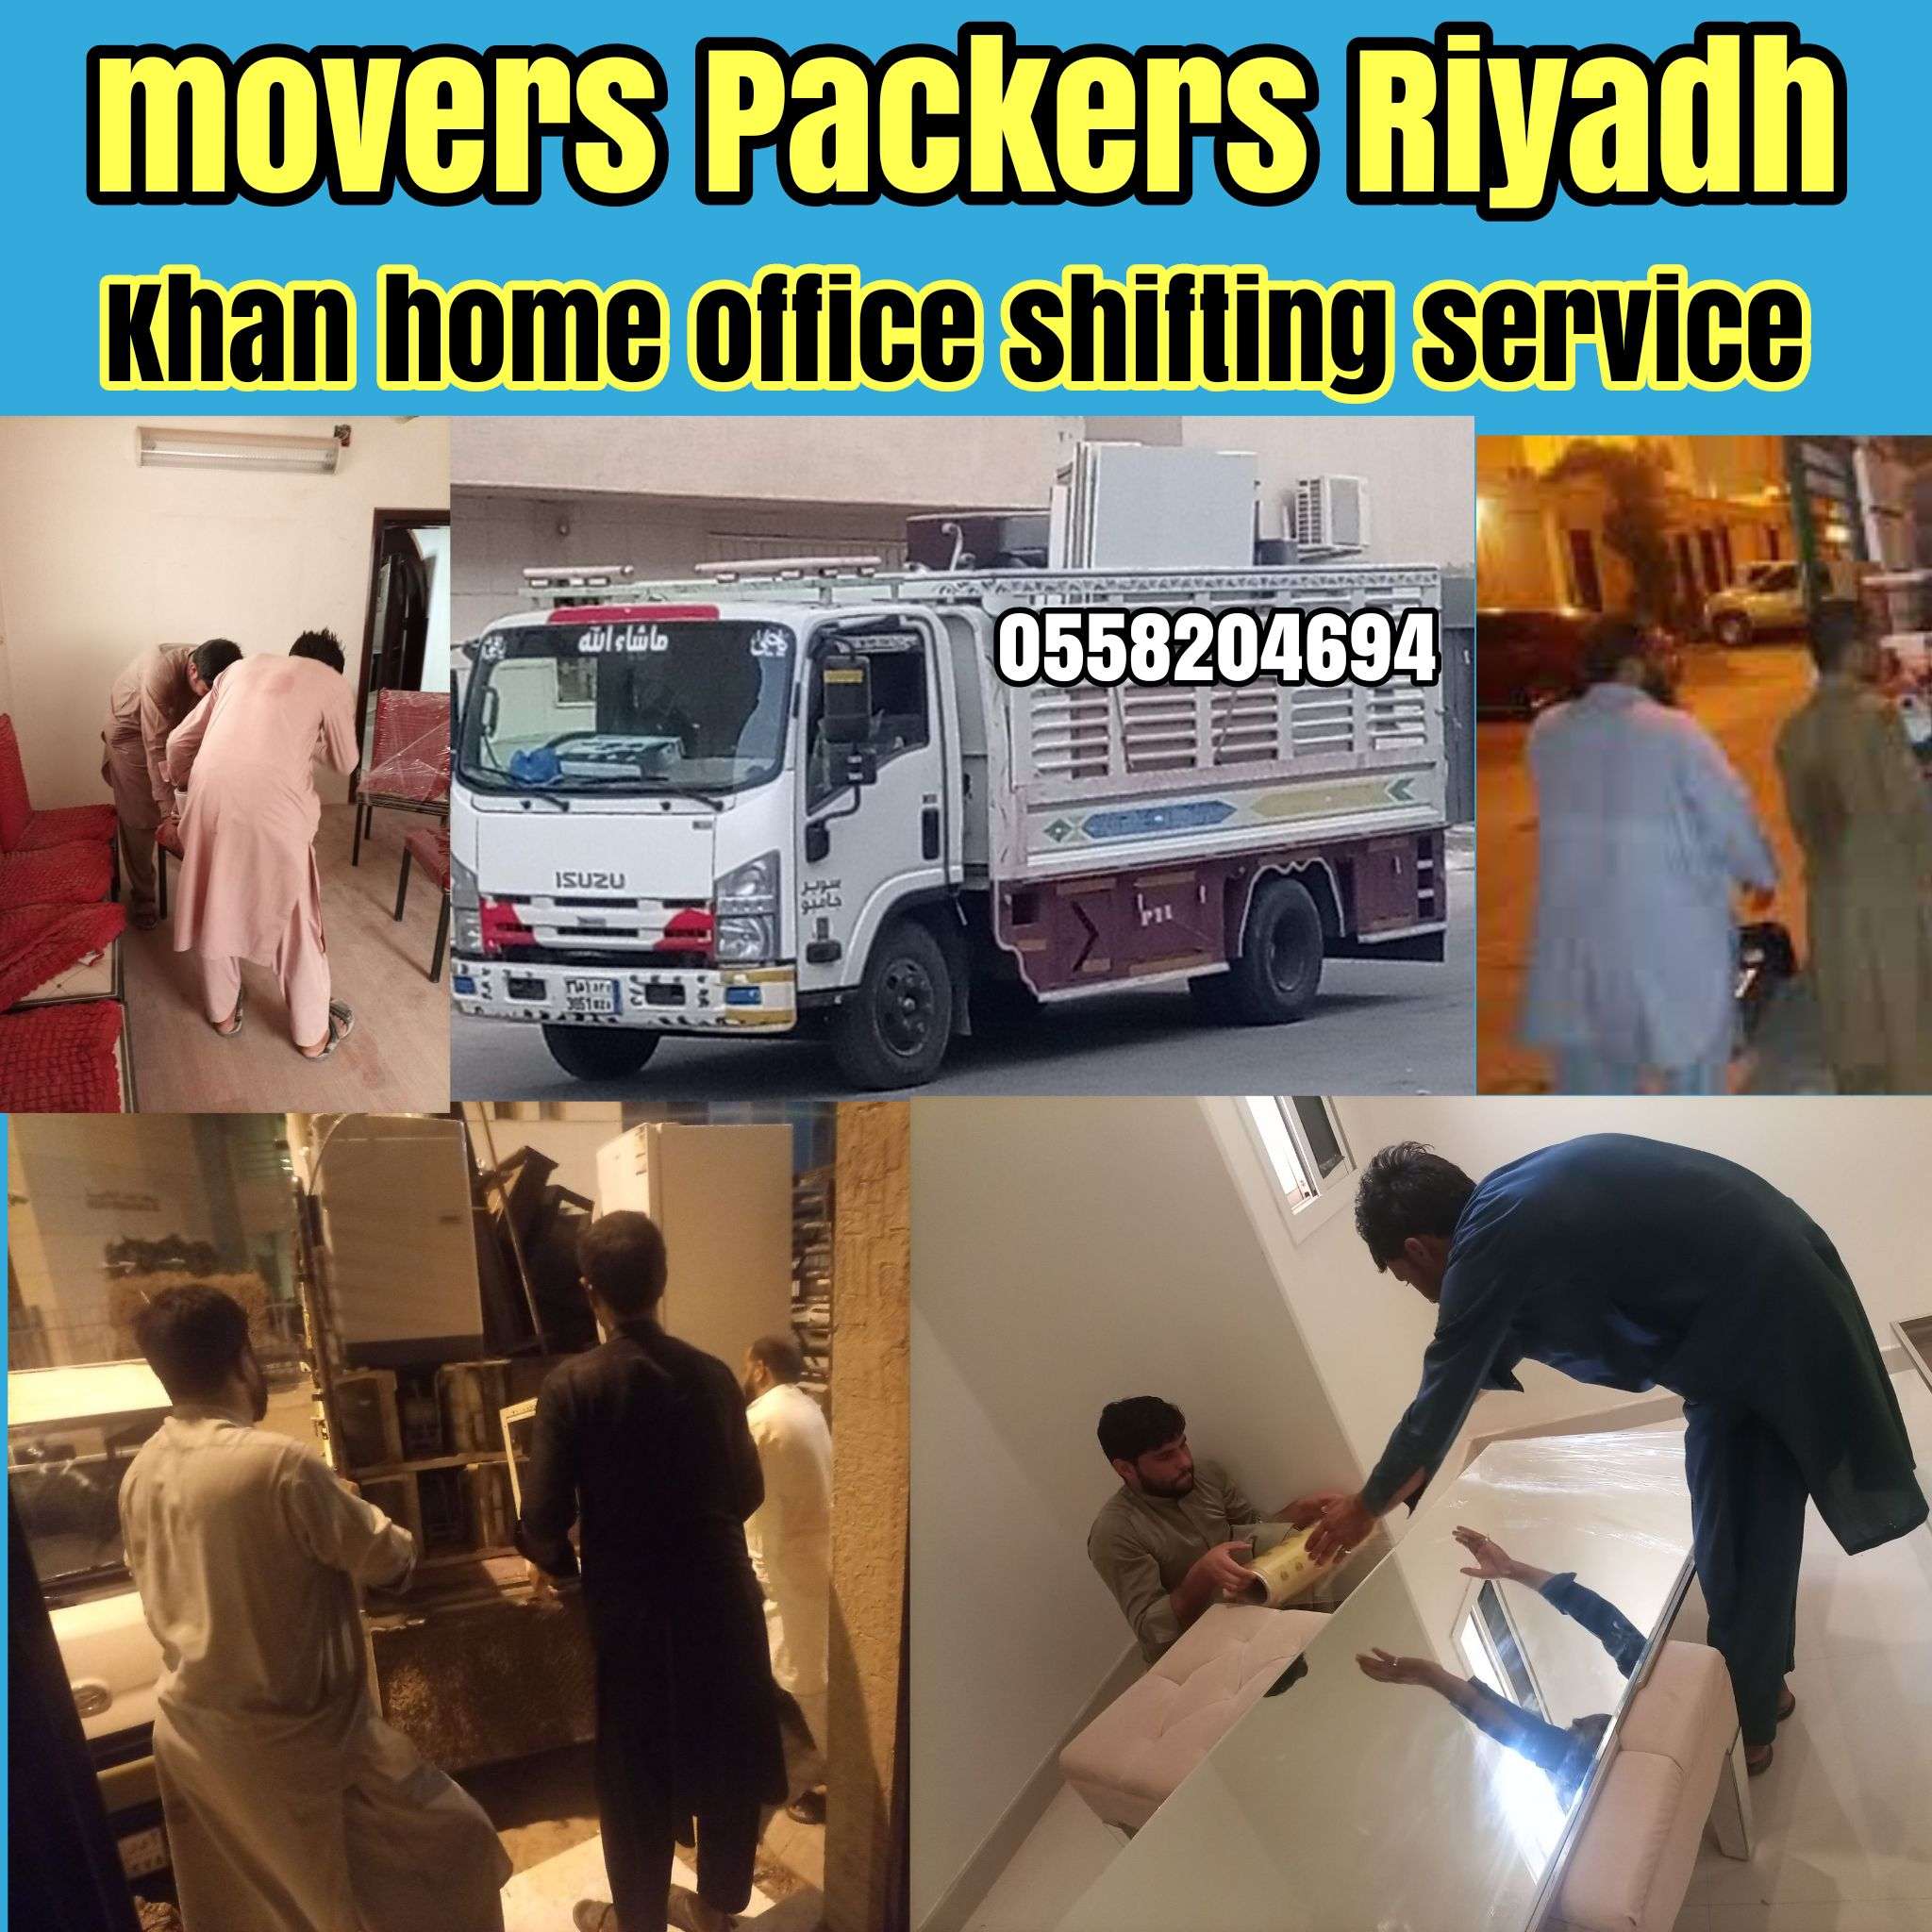 Movers Packers Riyadh